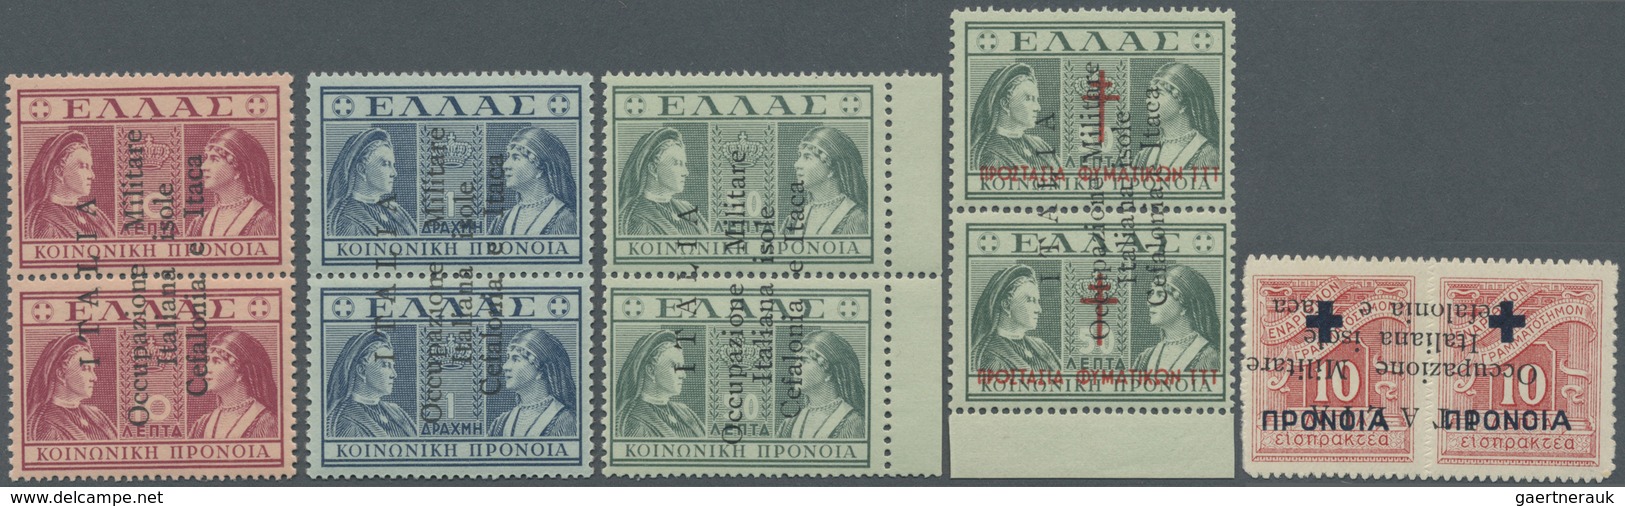 ** Italienische Besetzung 1941/43 - Griechenland: 1941. Charity Stamps Of Greece, Overprinted "ltalia O - Cefalonia & Itaca